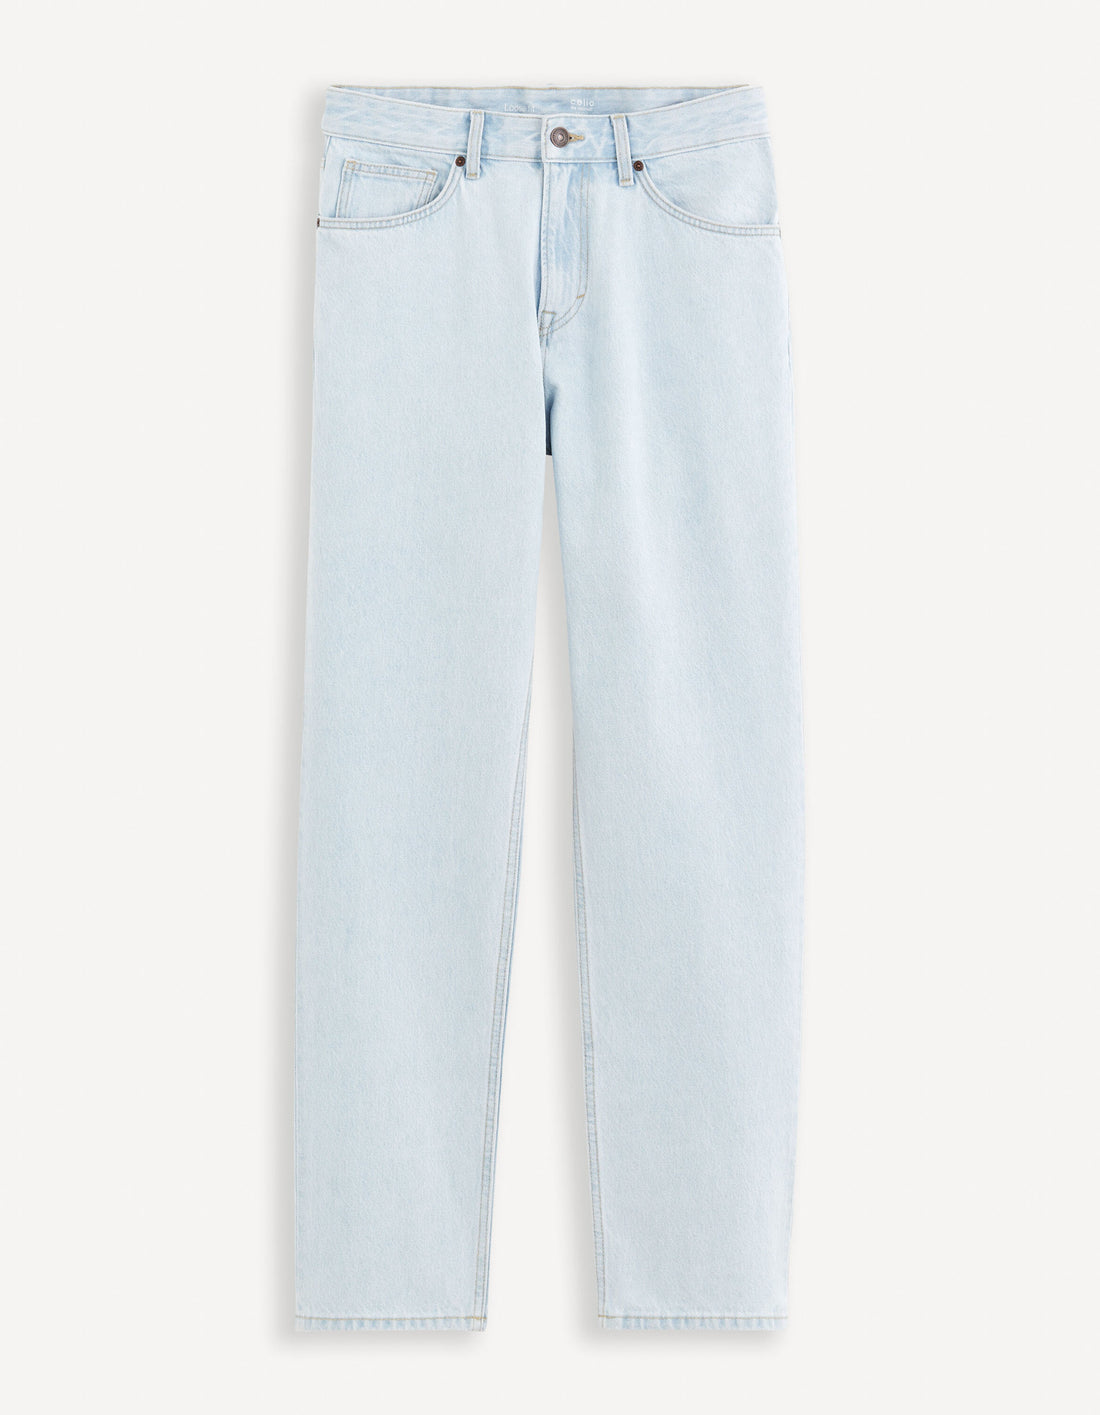 C75 Loose Jeans 100% Cotton_FOLOOSE_LIGHT BLUE_02